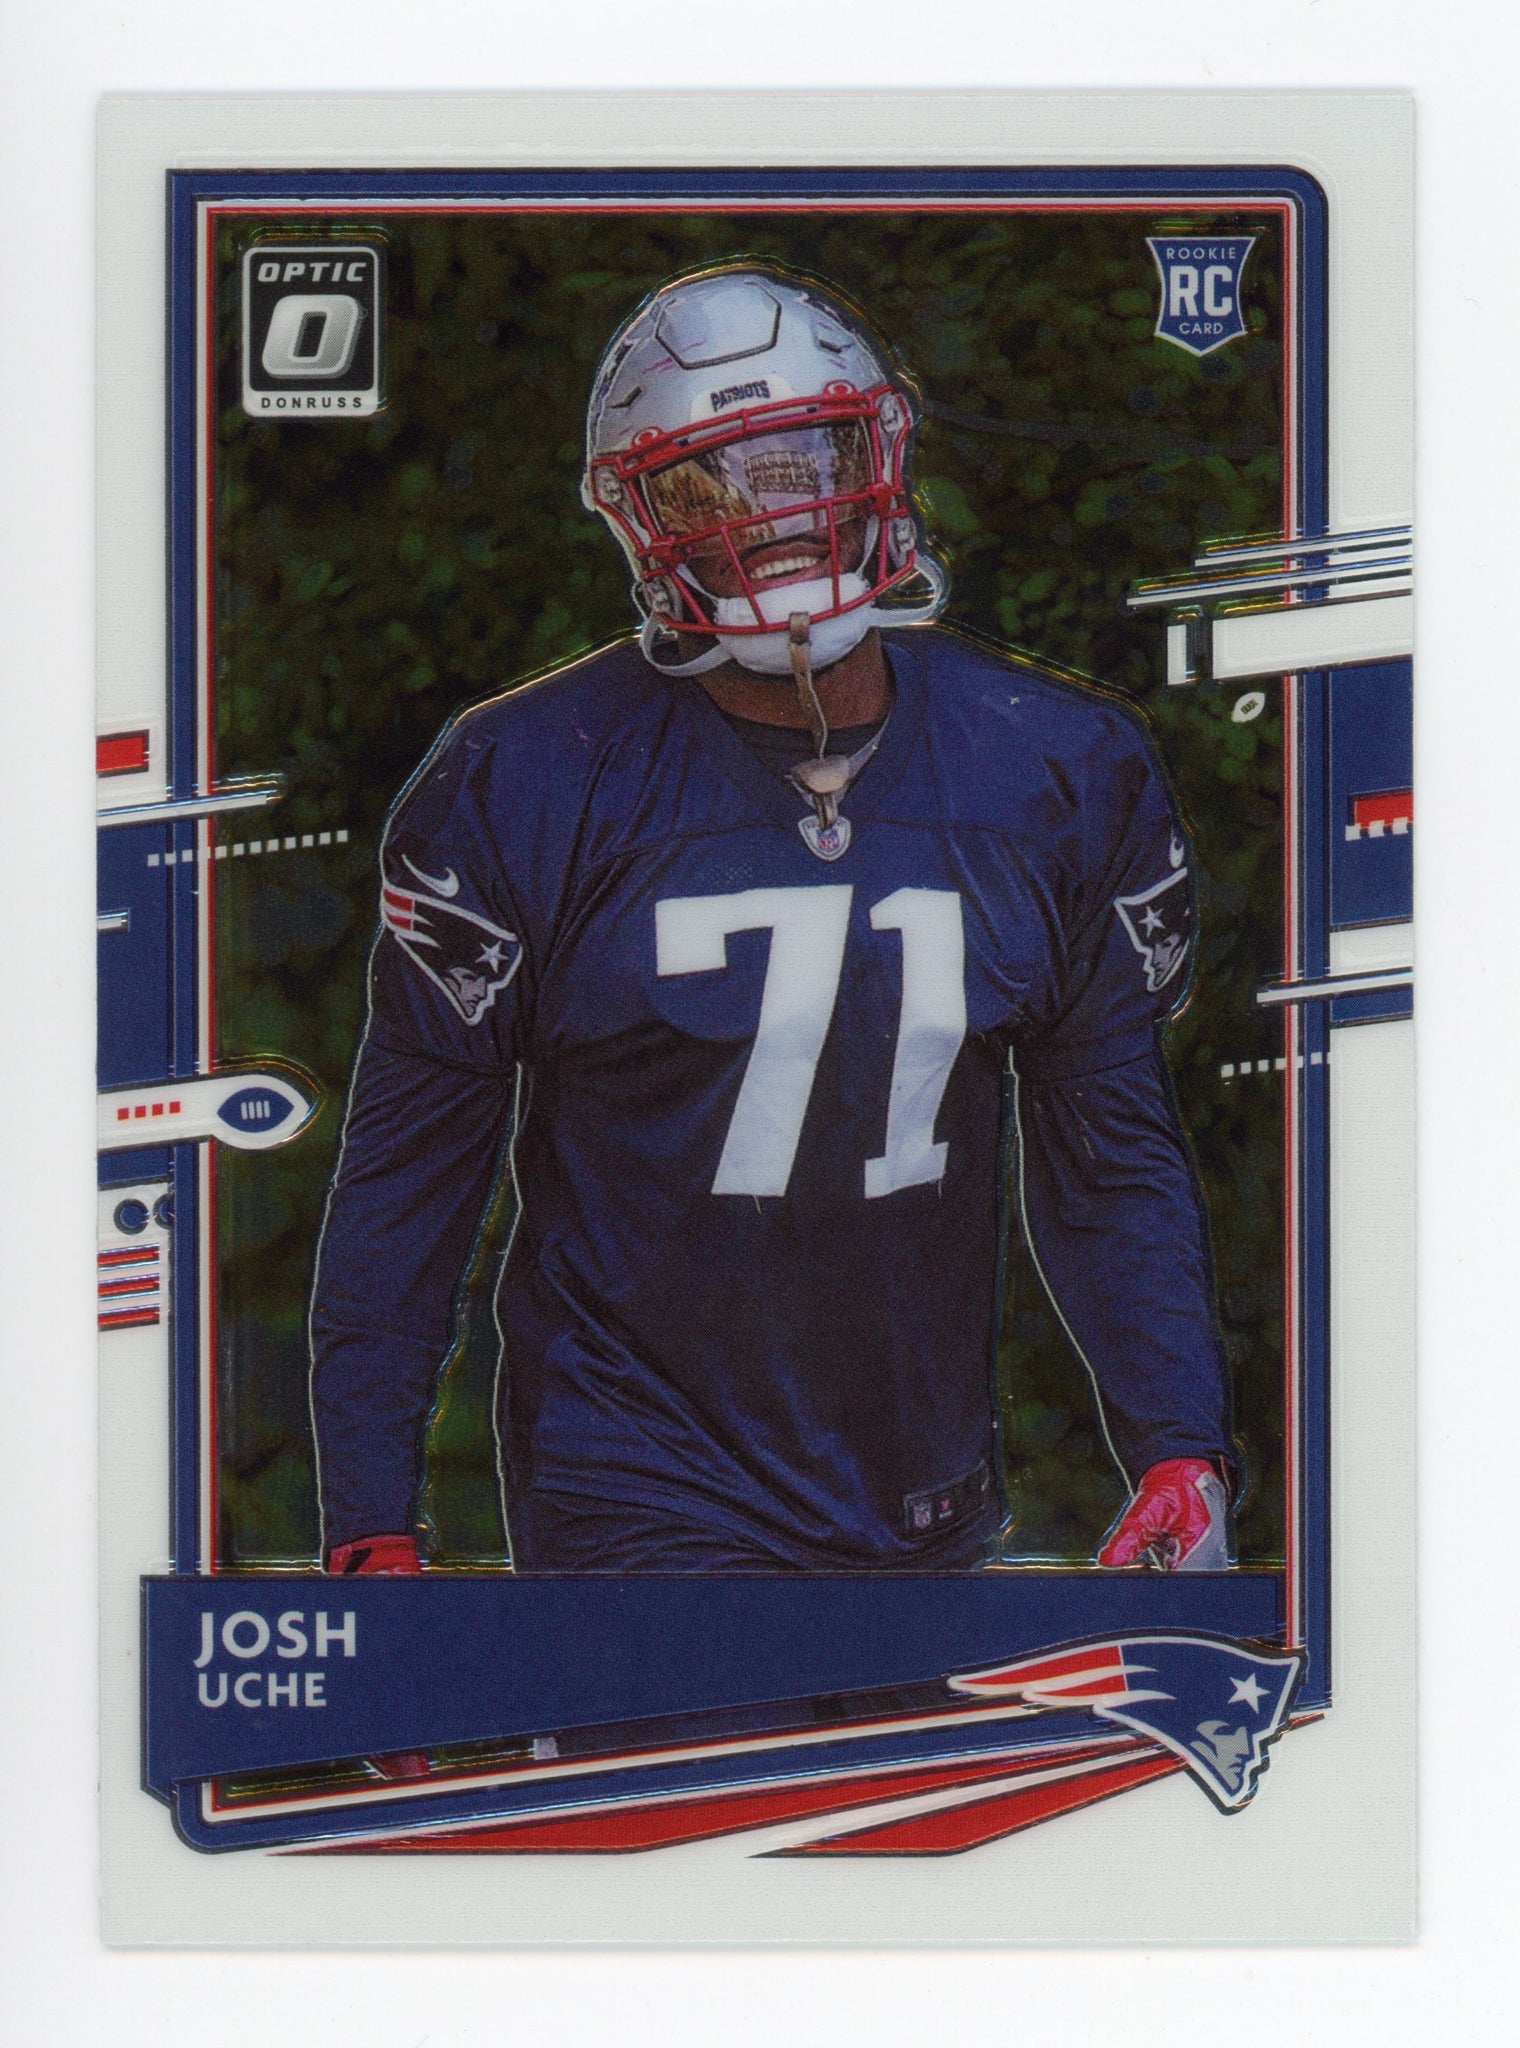 2020 Josh Uche Rookie Optic Panini New England Patriots # 137